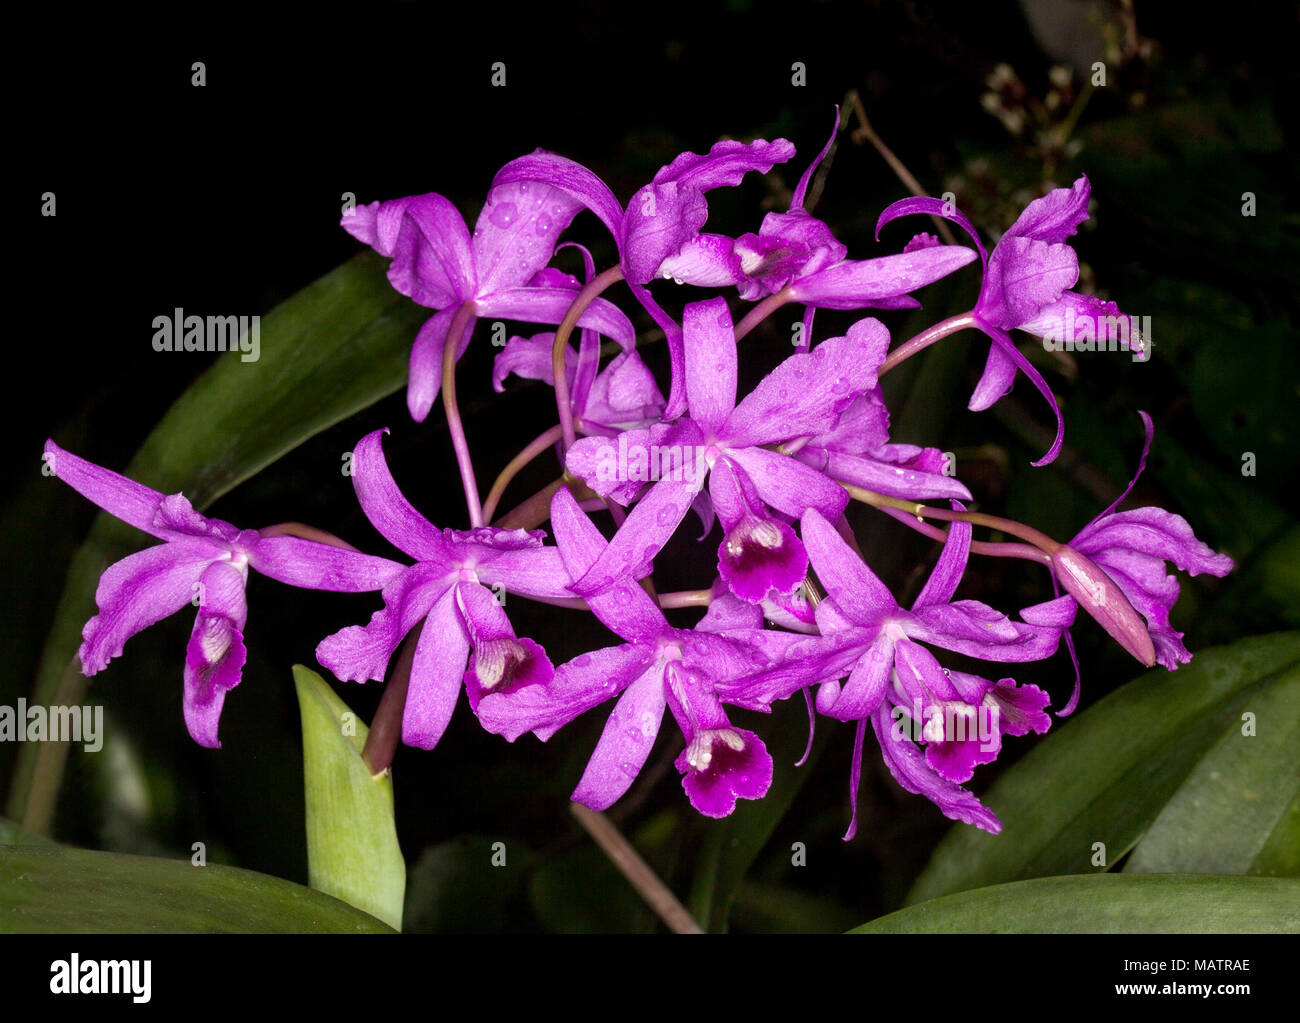 Cluster of beautiful vivid purple flowers of orchid, Cattleya bowringiana against dark background Stock Photo